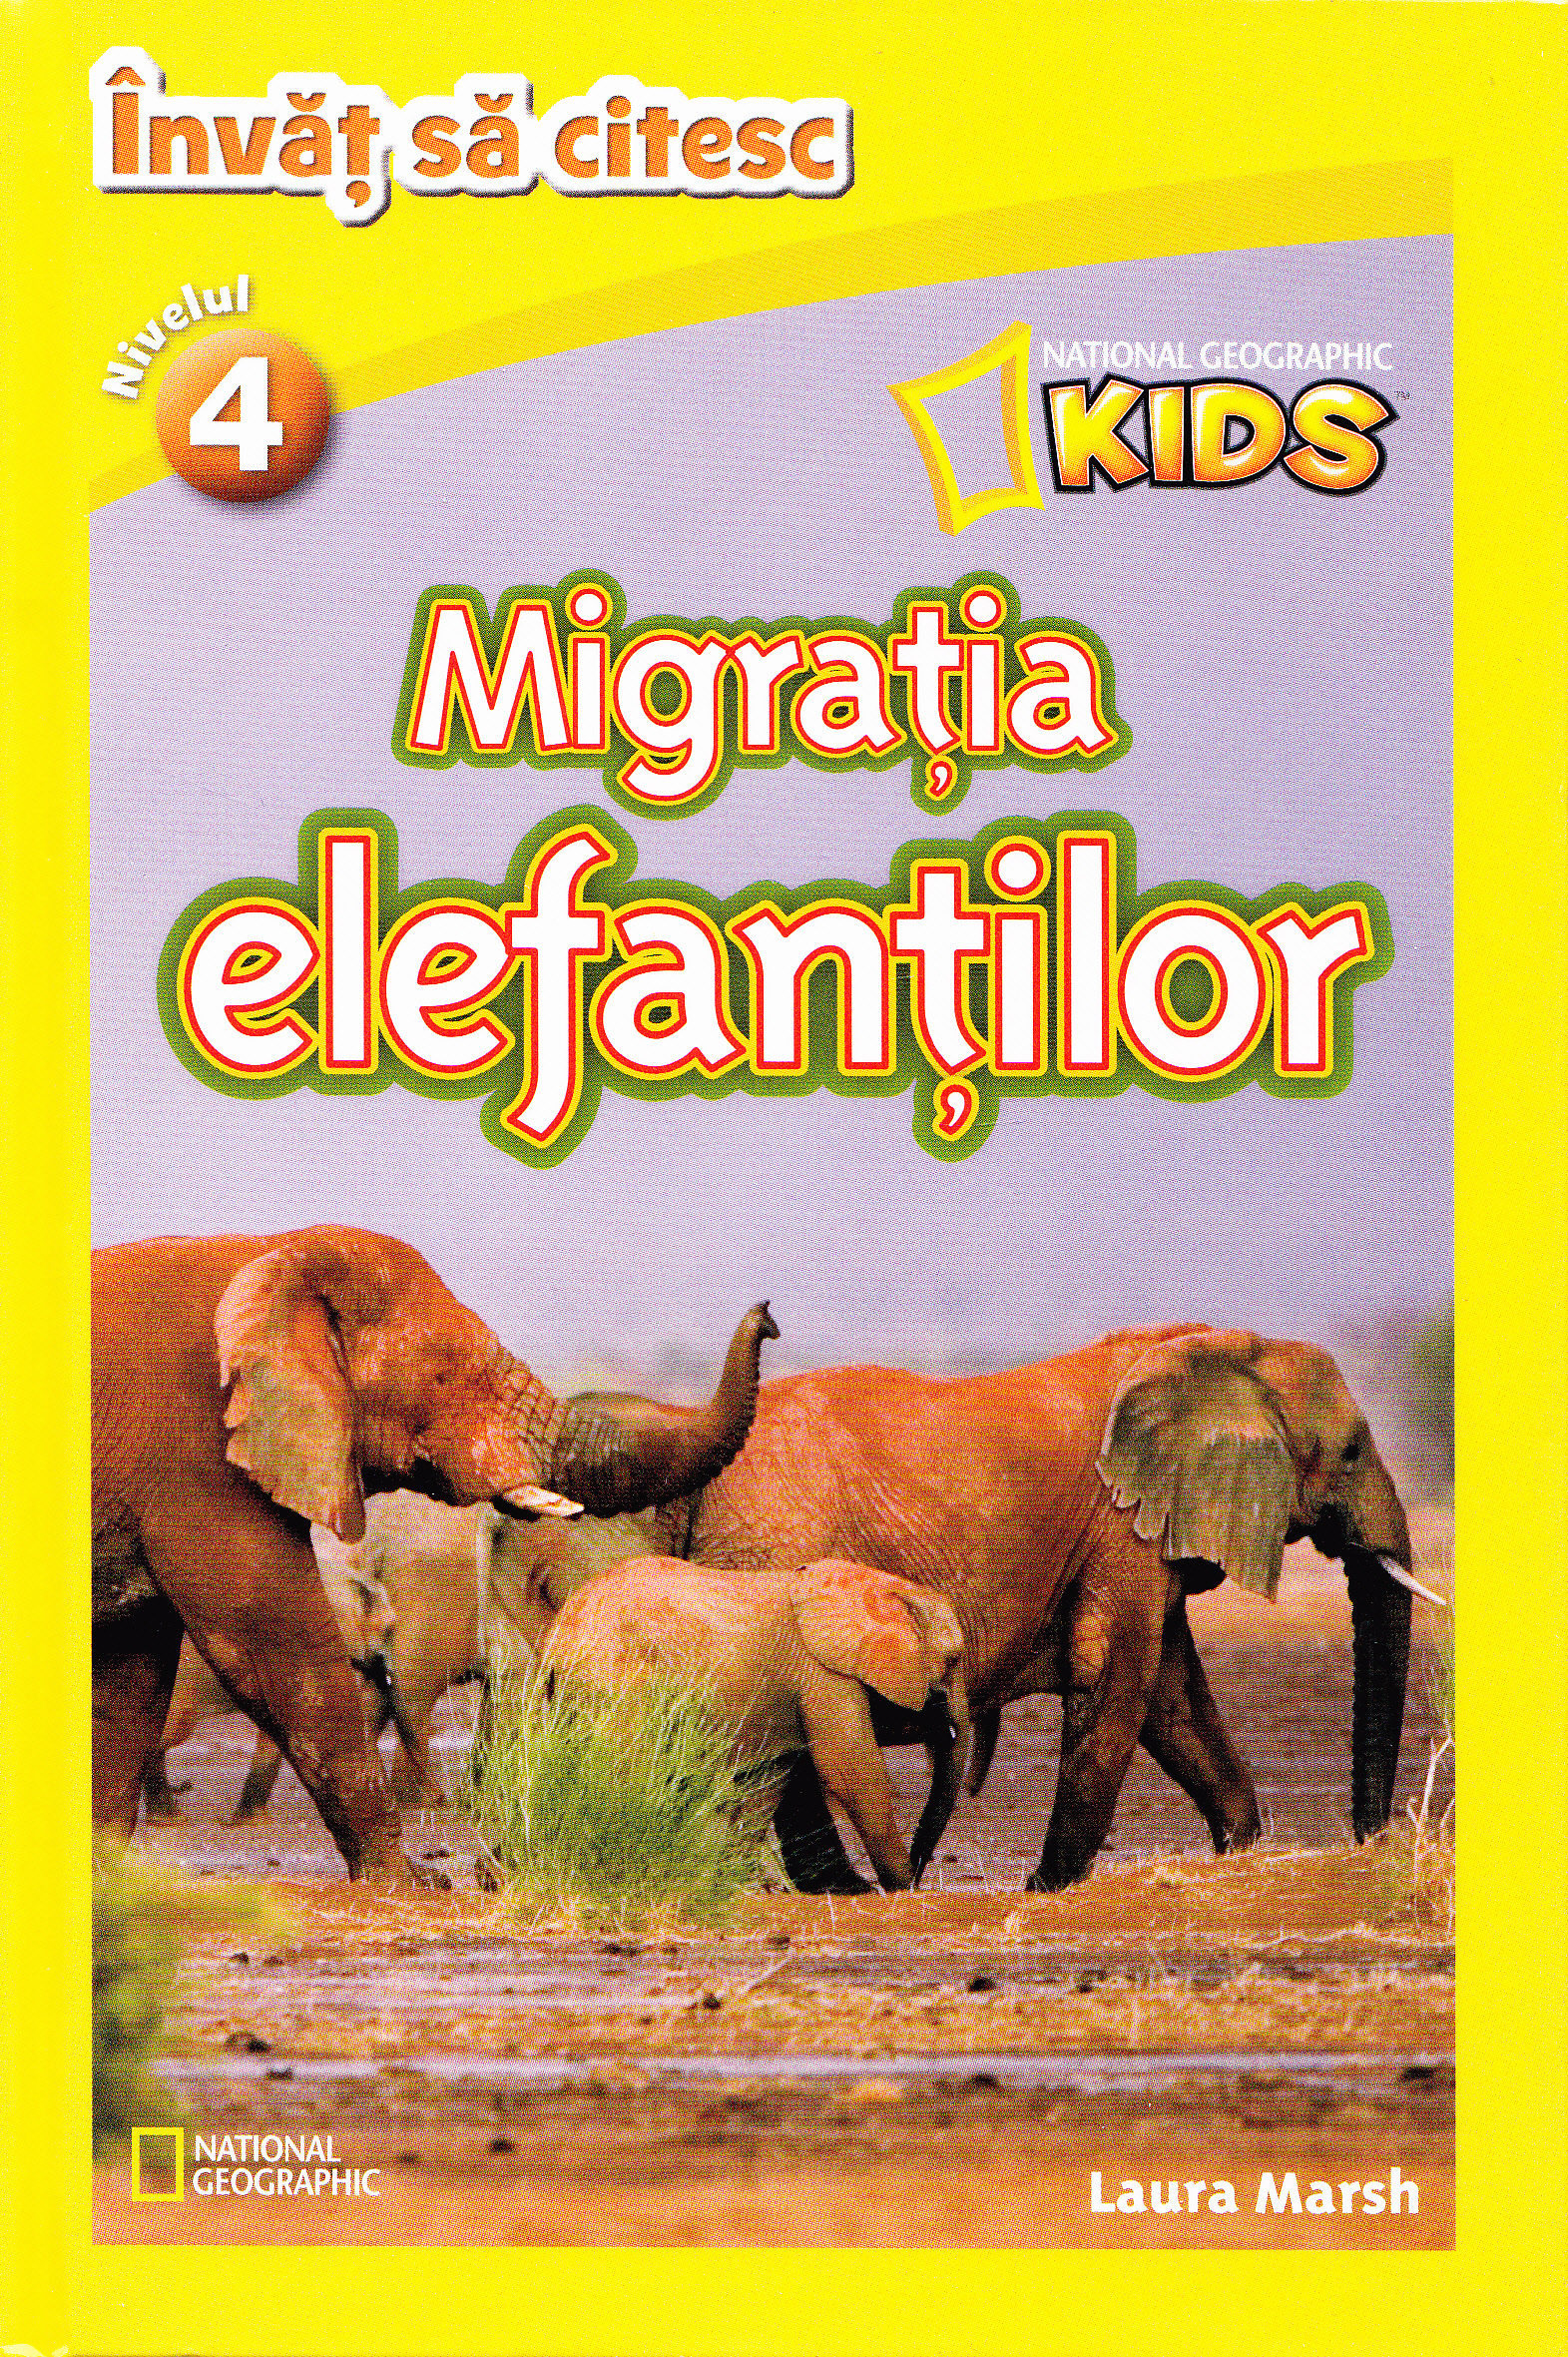 Migratia elefantilor - National Geographic Kids - Invat sa citesc nivelul 4